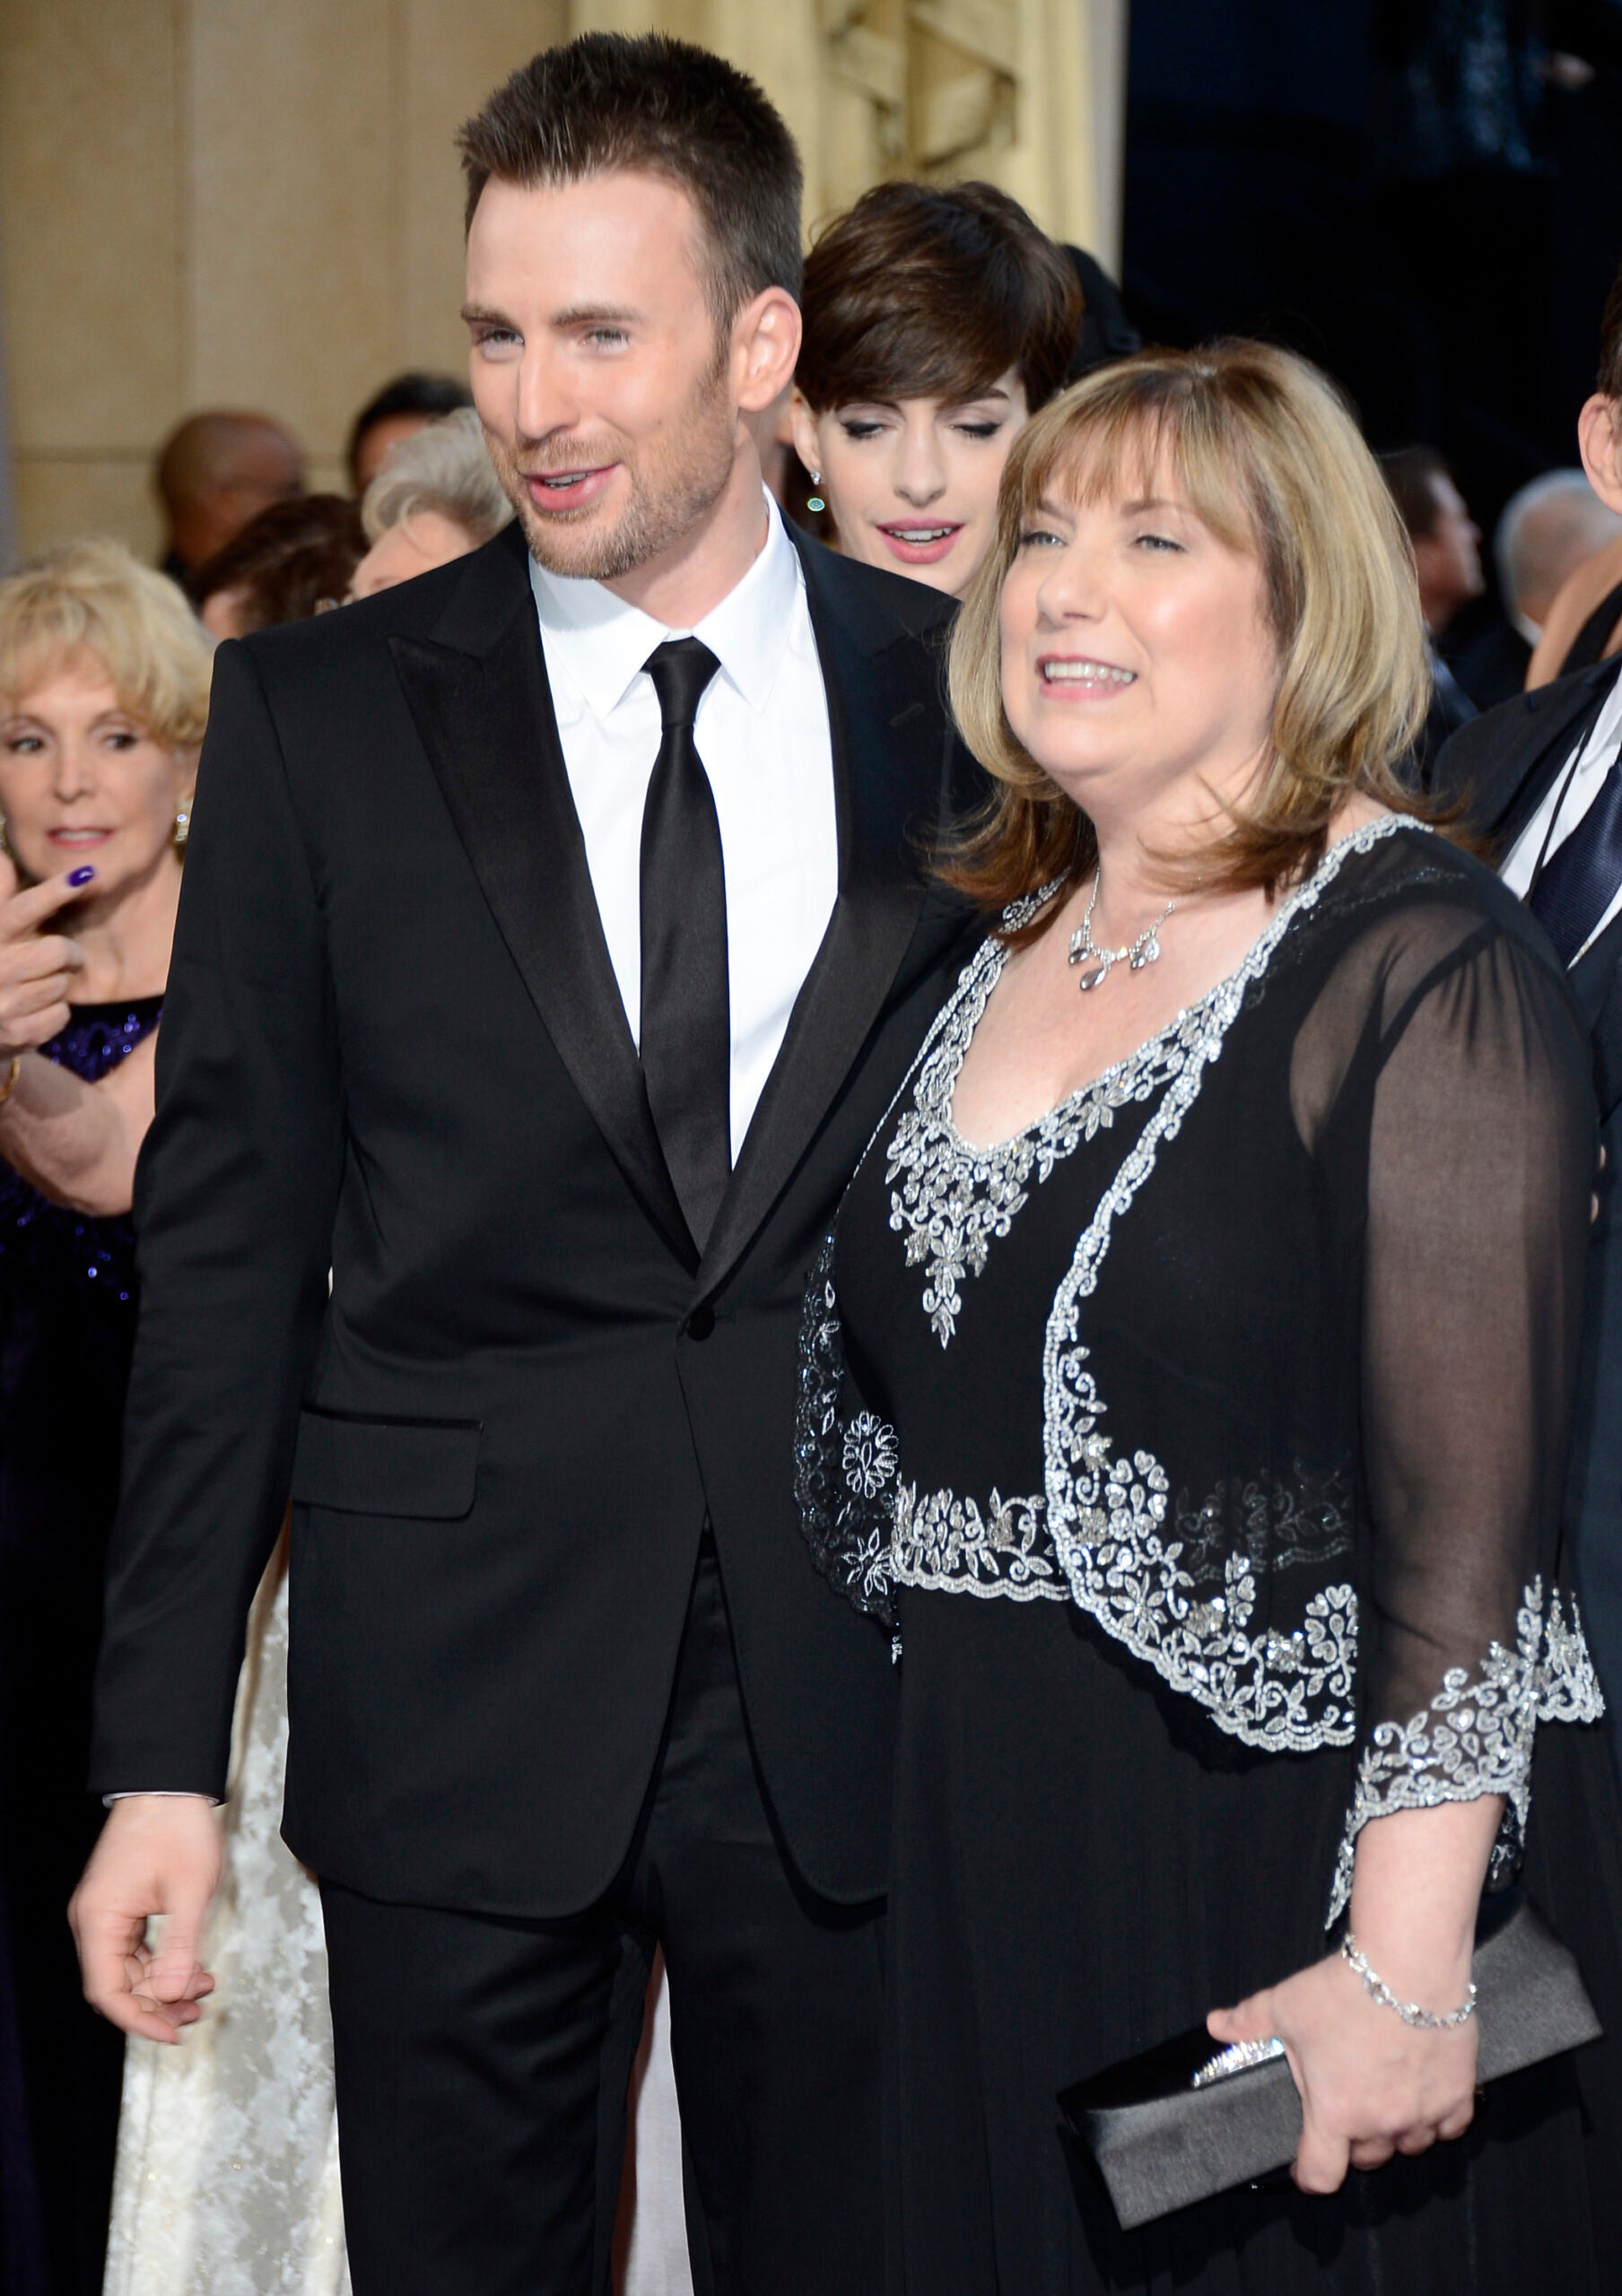 Sudbury's Chris Evans brings his mom to the Oscars